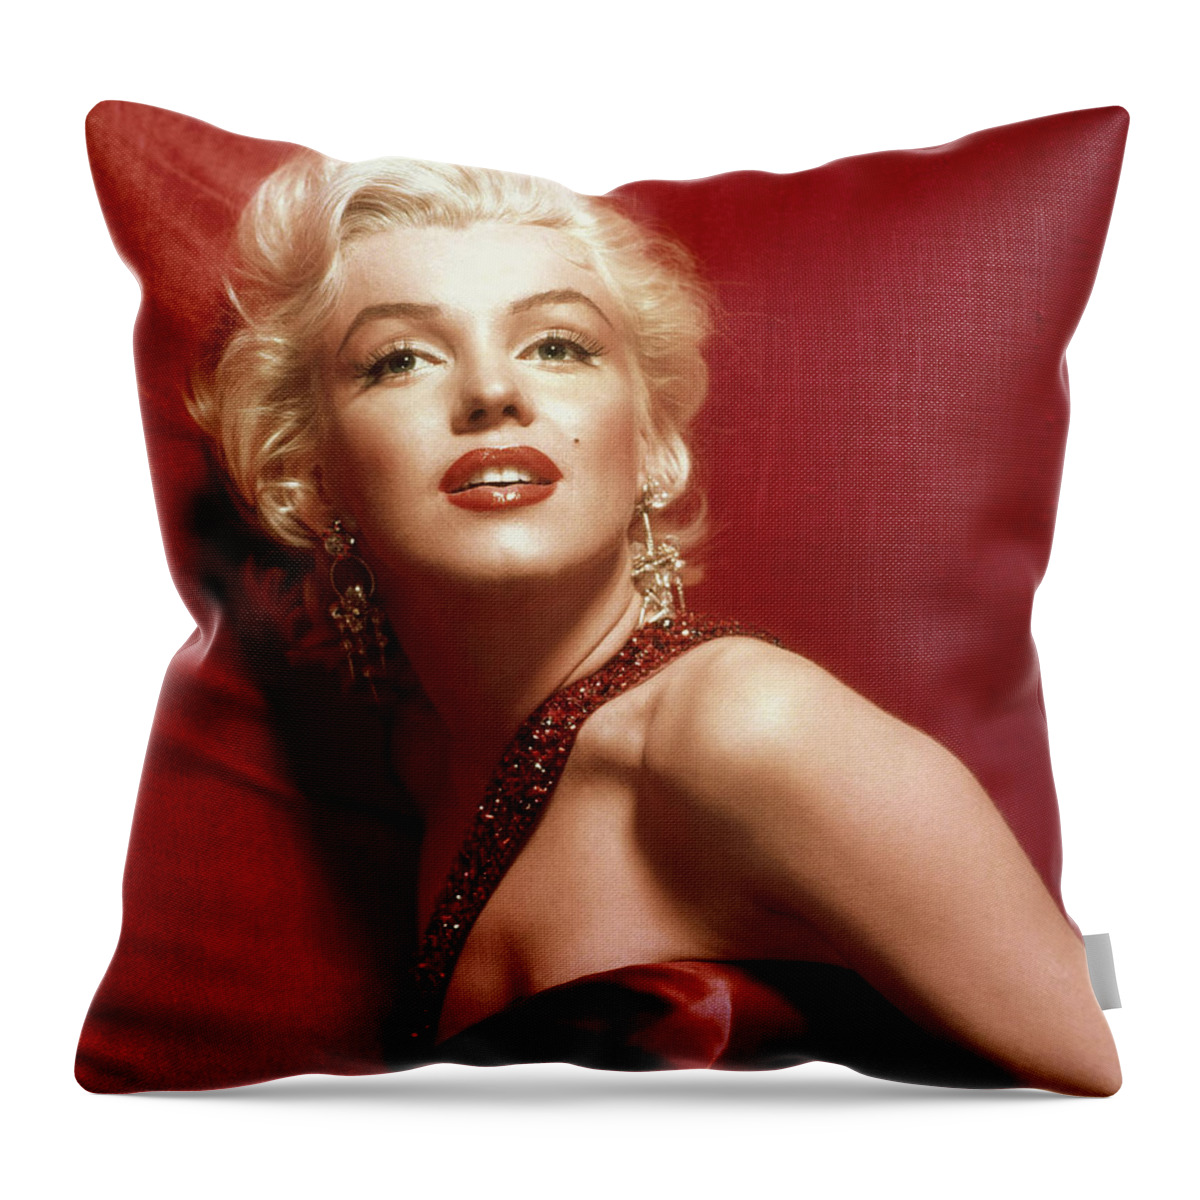 Marilyn Monroe Throw Pillow featuring the digital art Marilyn Monroe in Red by Georgia Fowler